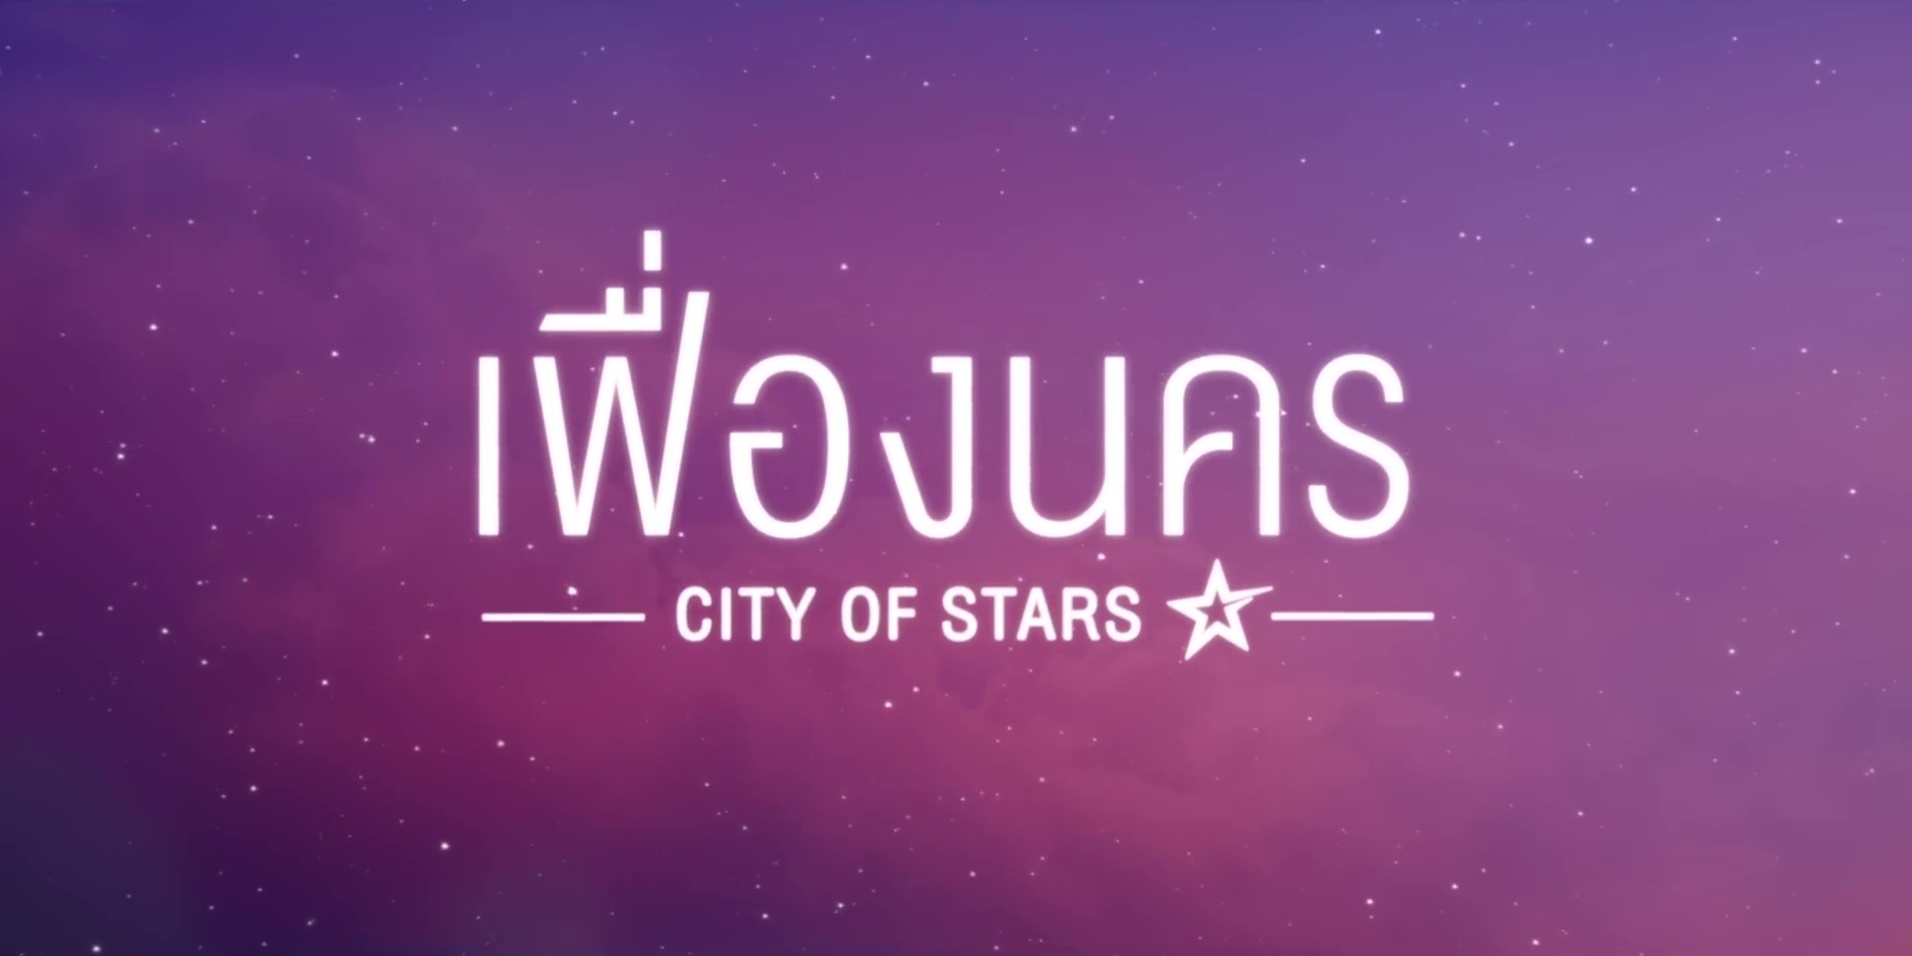 City Of The Stars